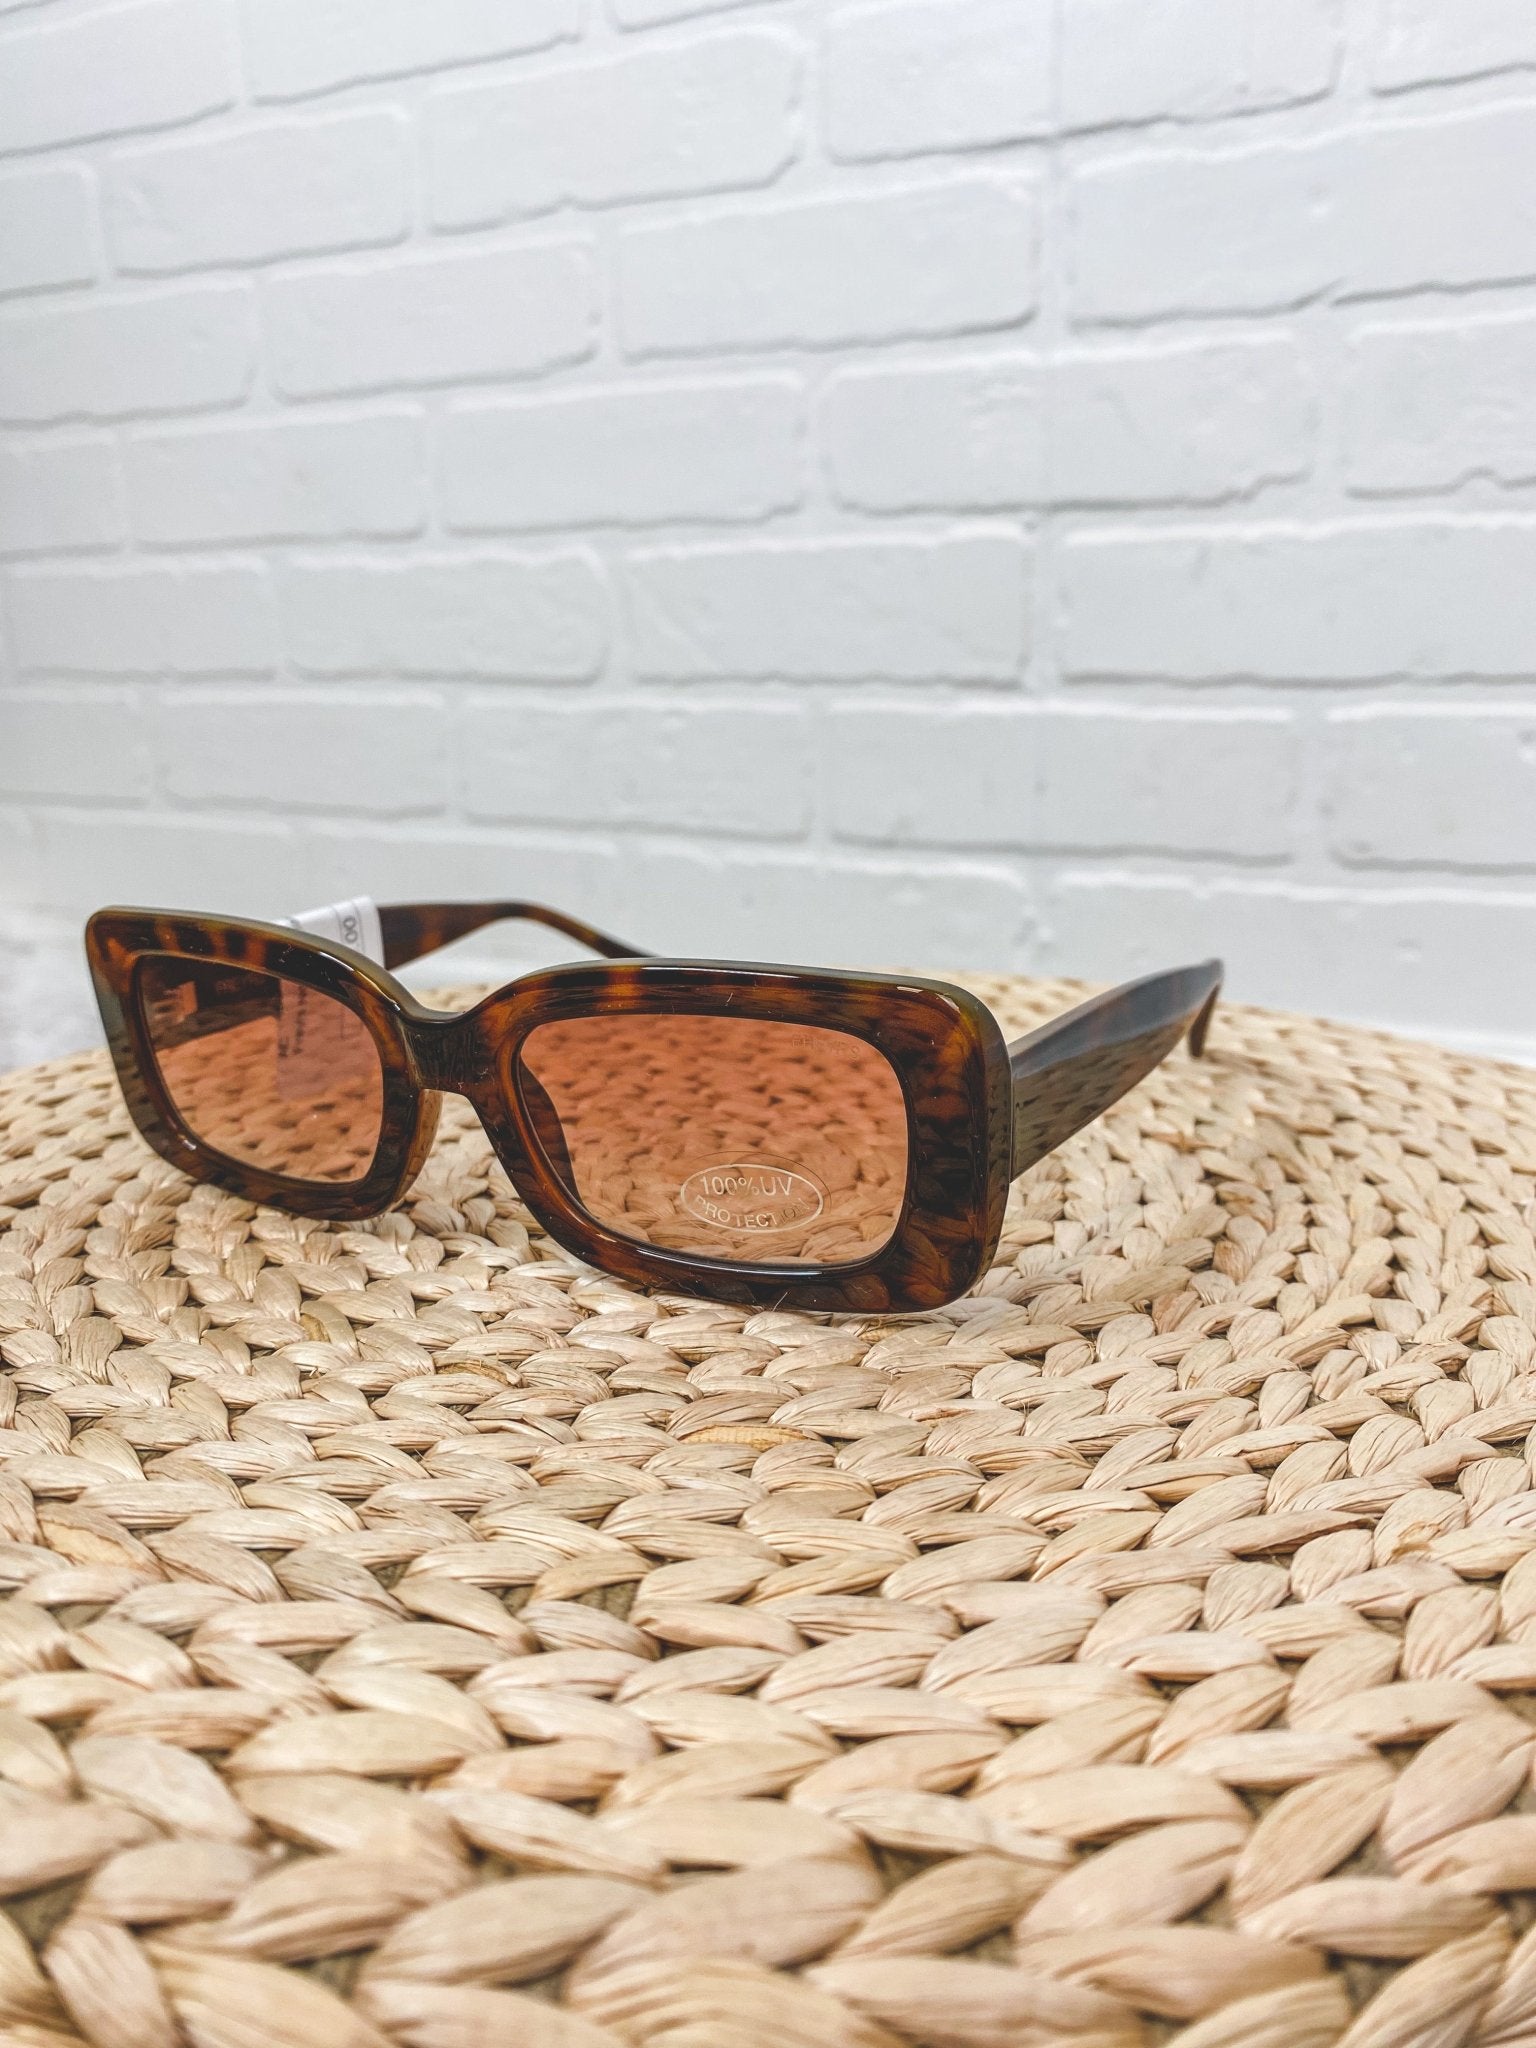 Freyrs Noa sunglasses tortoise - Stylish Sunglasses - Trendy Glasses at Lush Fashion Lounge Boutique in Oklahoma